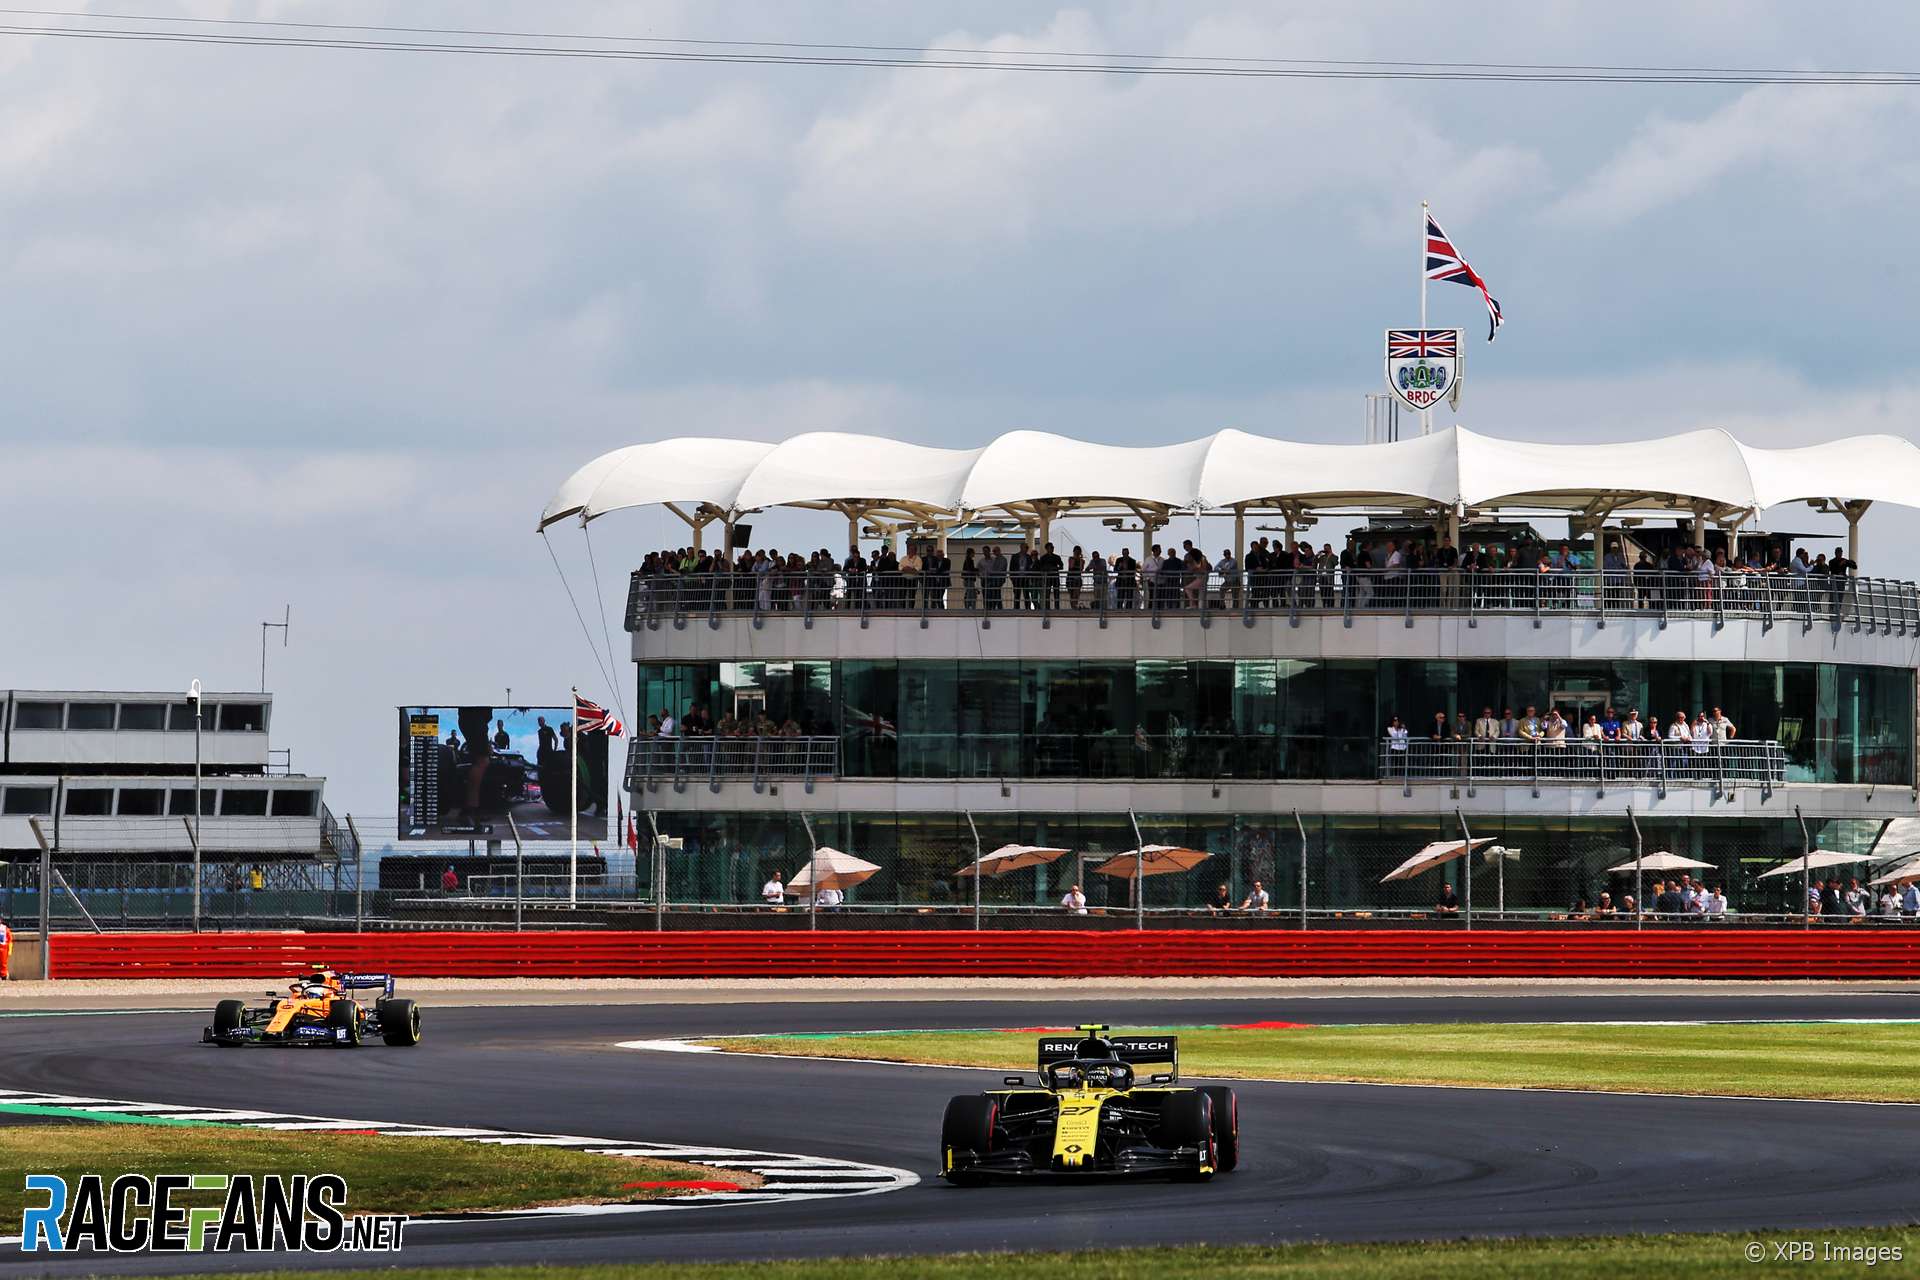 Nico Hulkenberg, Renault, Silverstone, 2019